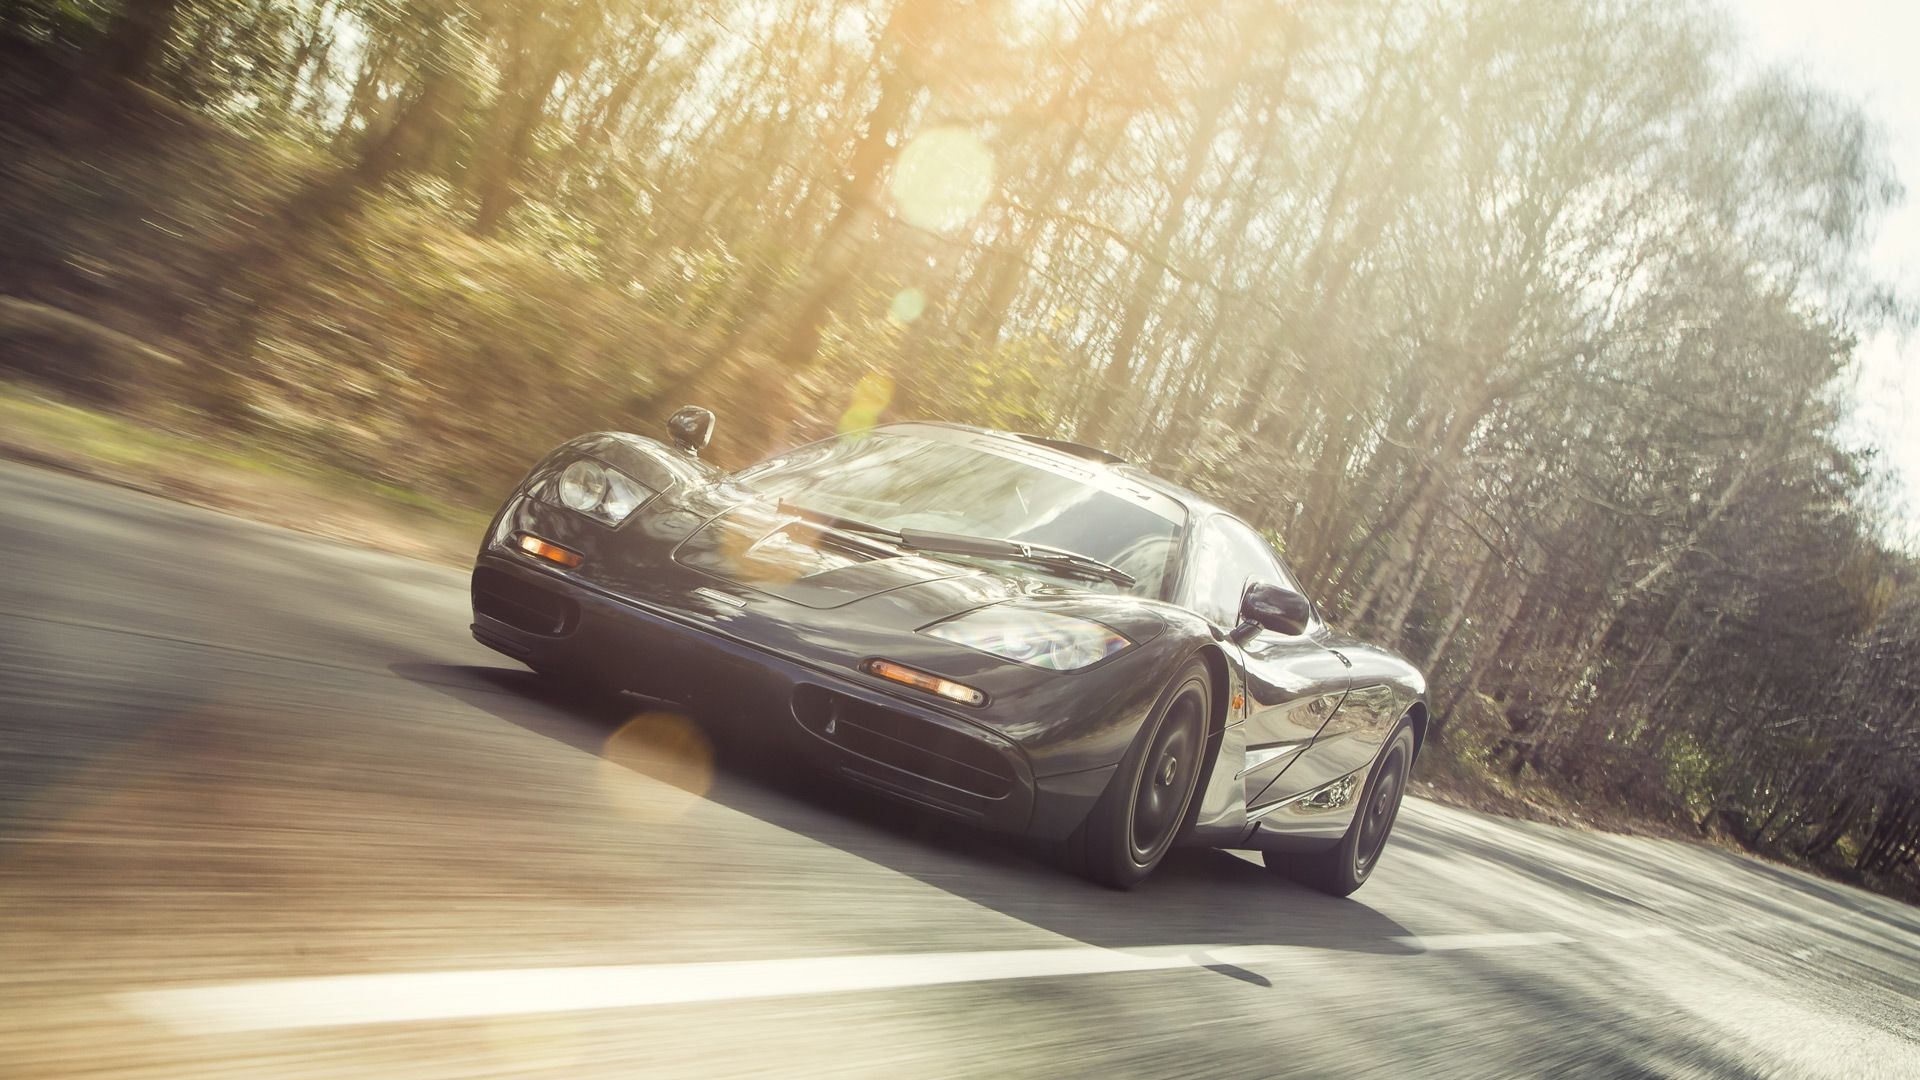 Autocar draws up its idea of a McLaren F1 spiritual successor - CNET